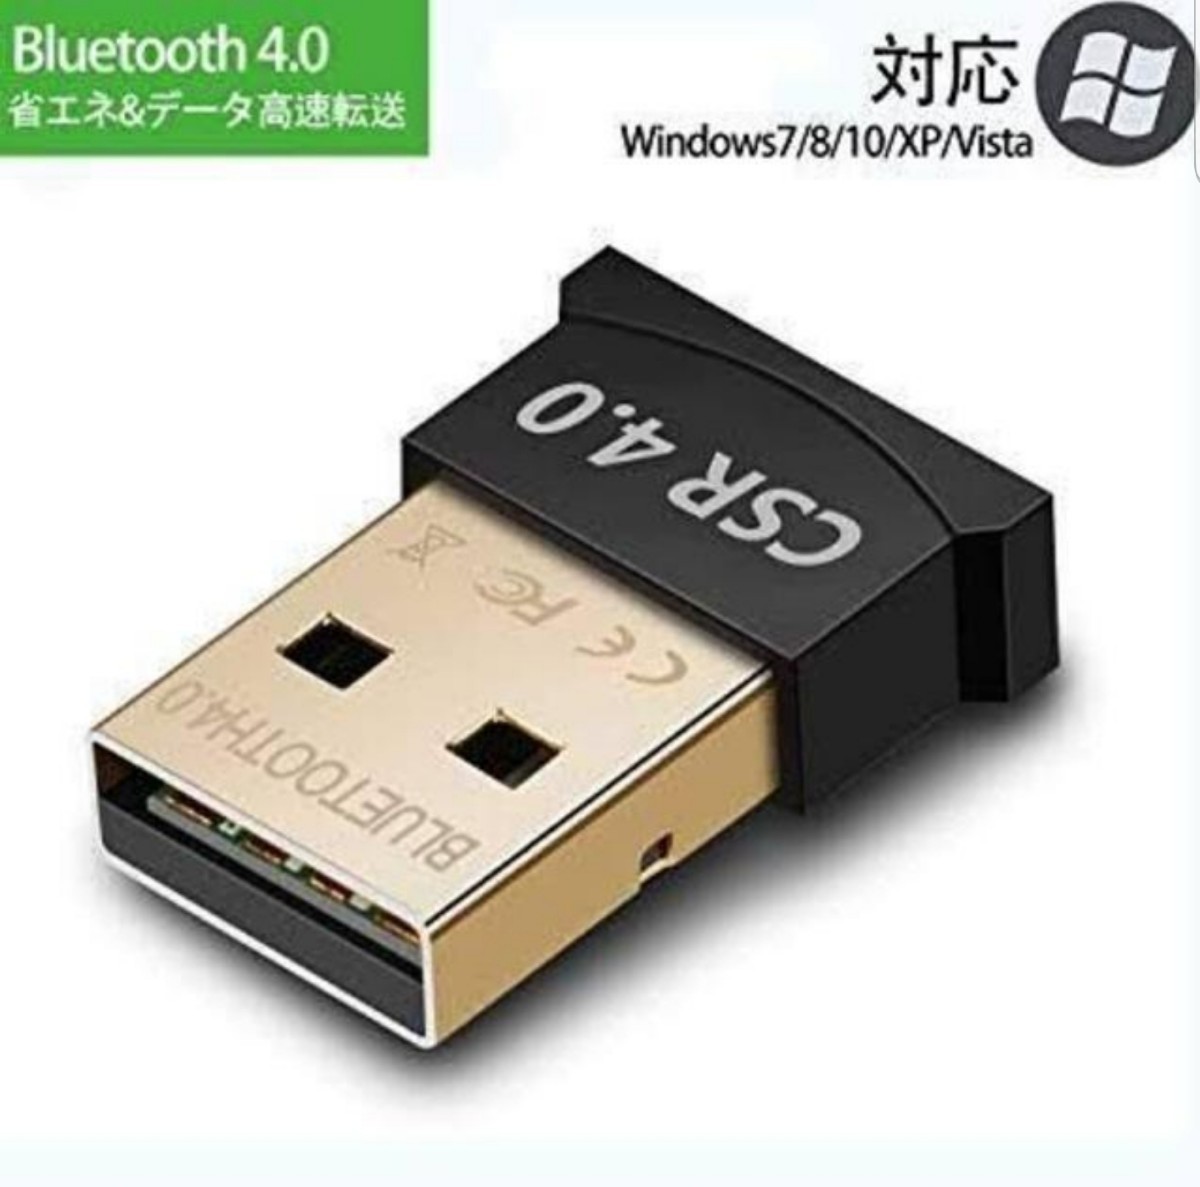 Bluetooth 4.0 ドングル USB アダプタ8個